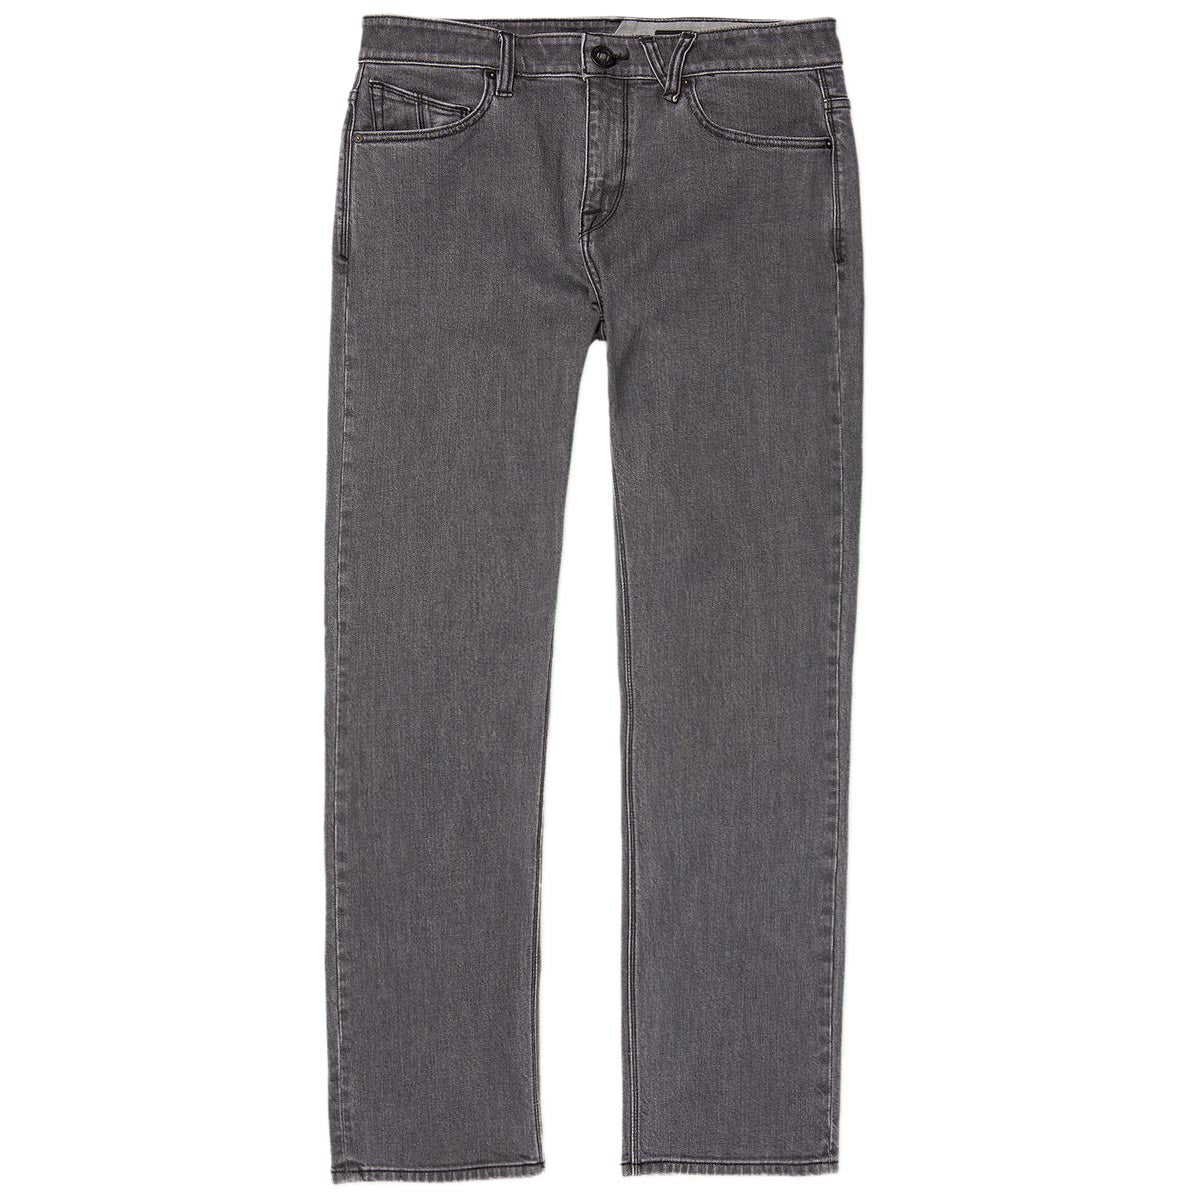 Volcom Solver Denim Jeans - Easy Enzyme Grey image 1